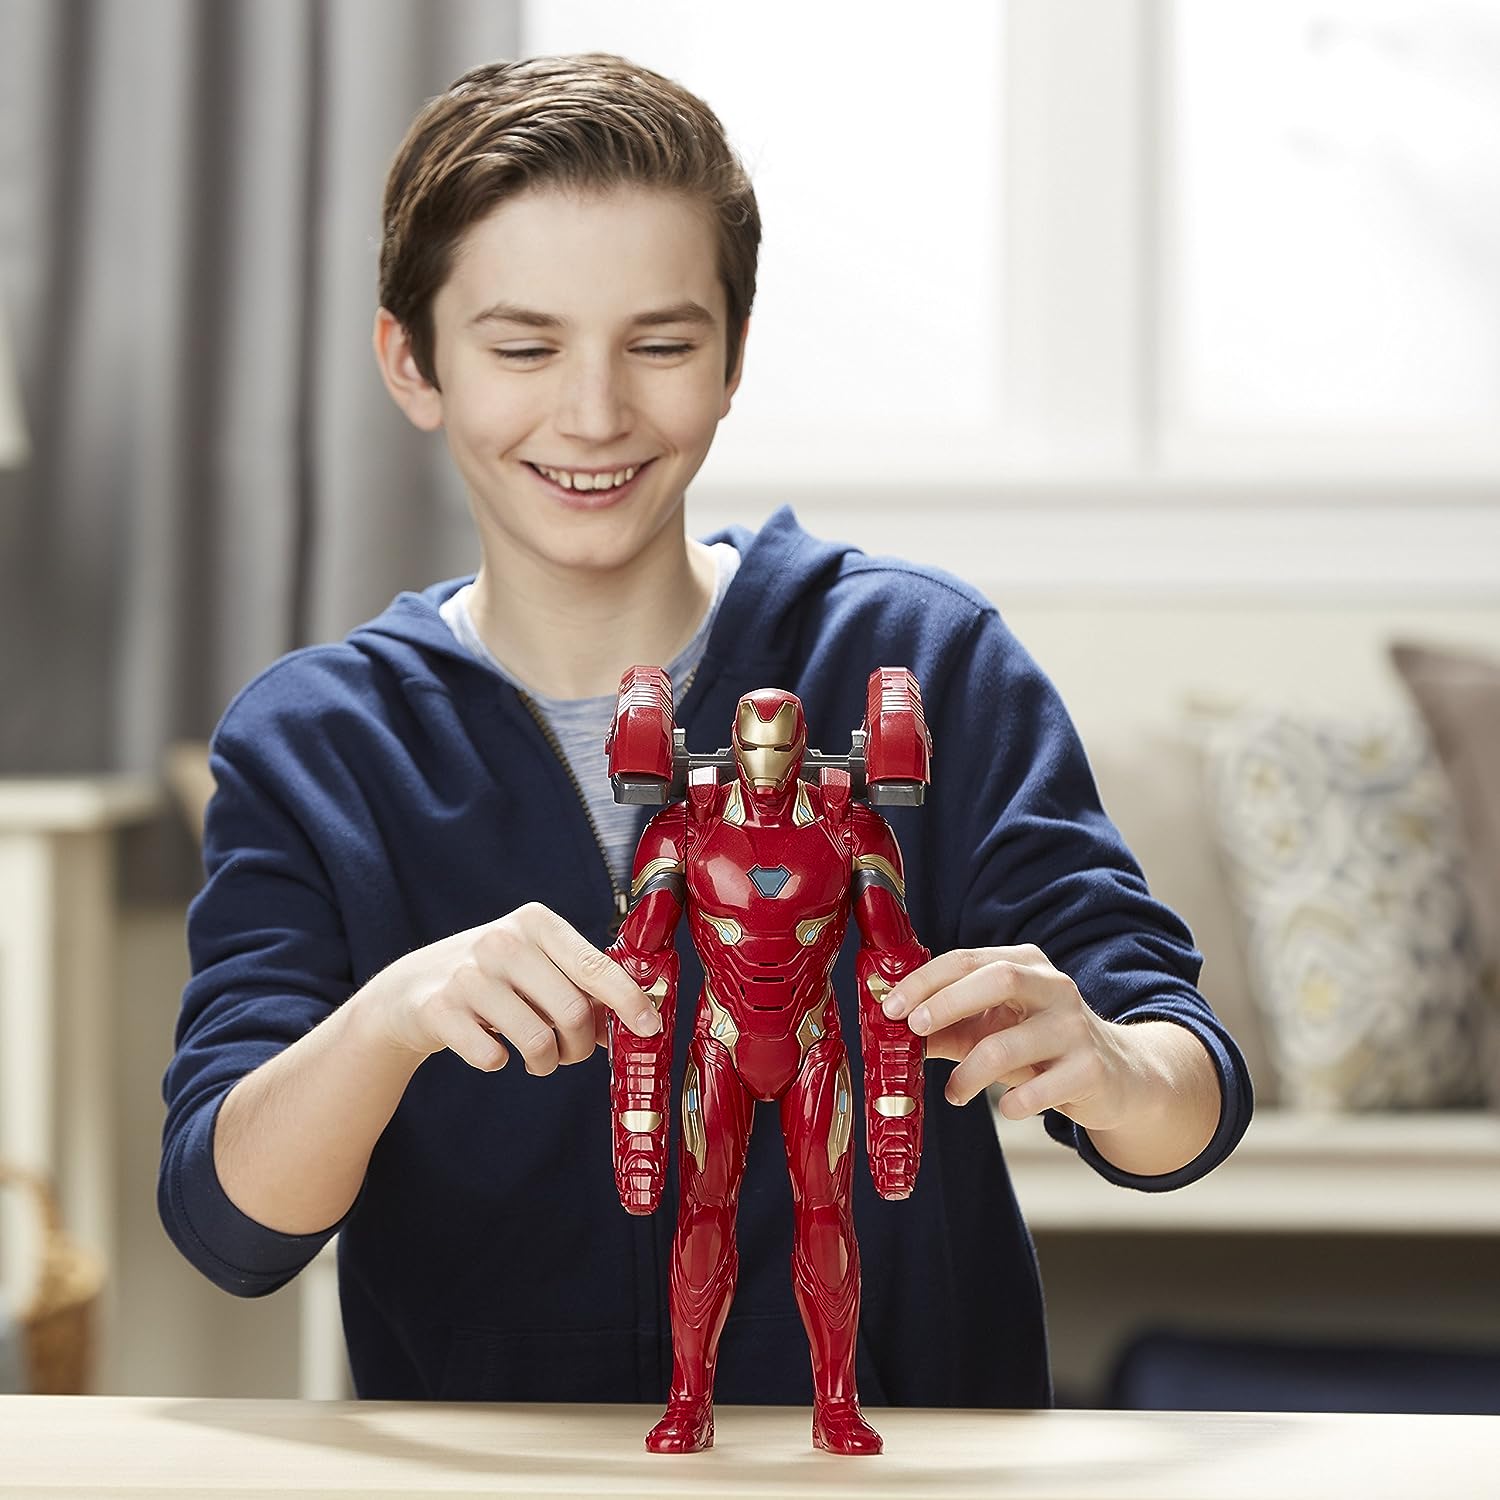 Avengers Marvel Infinity War Mission Tech Iron Man Figure